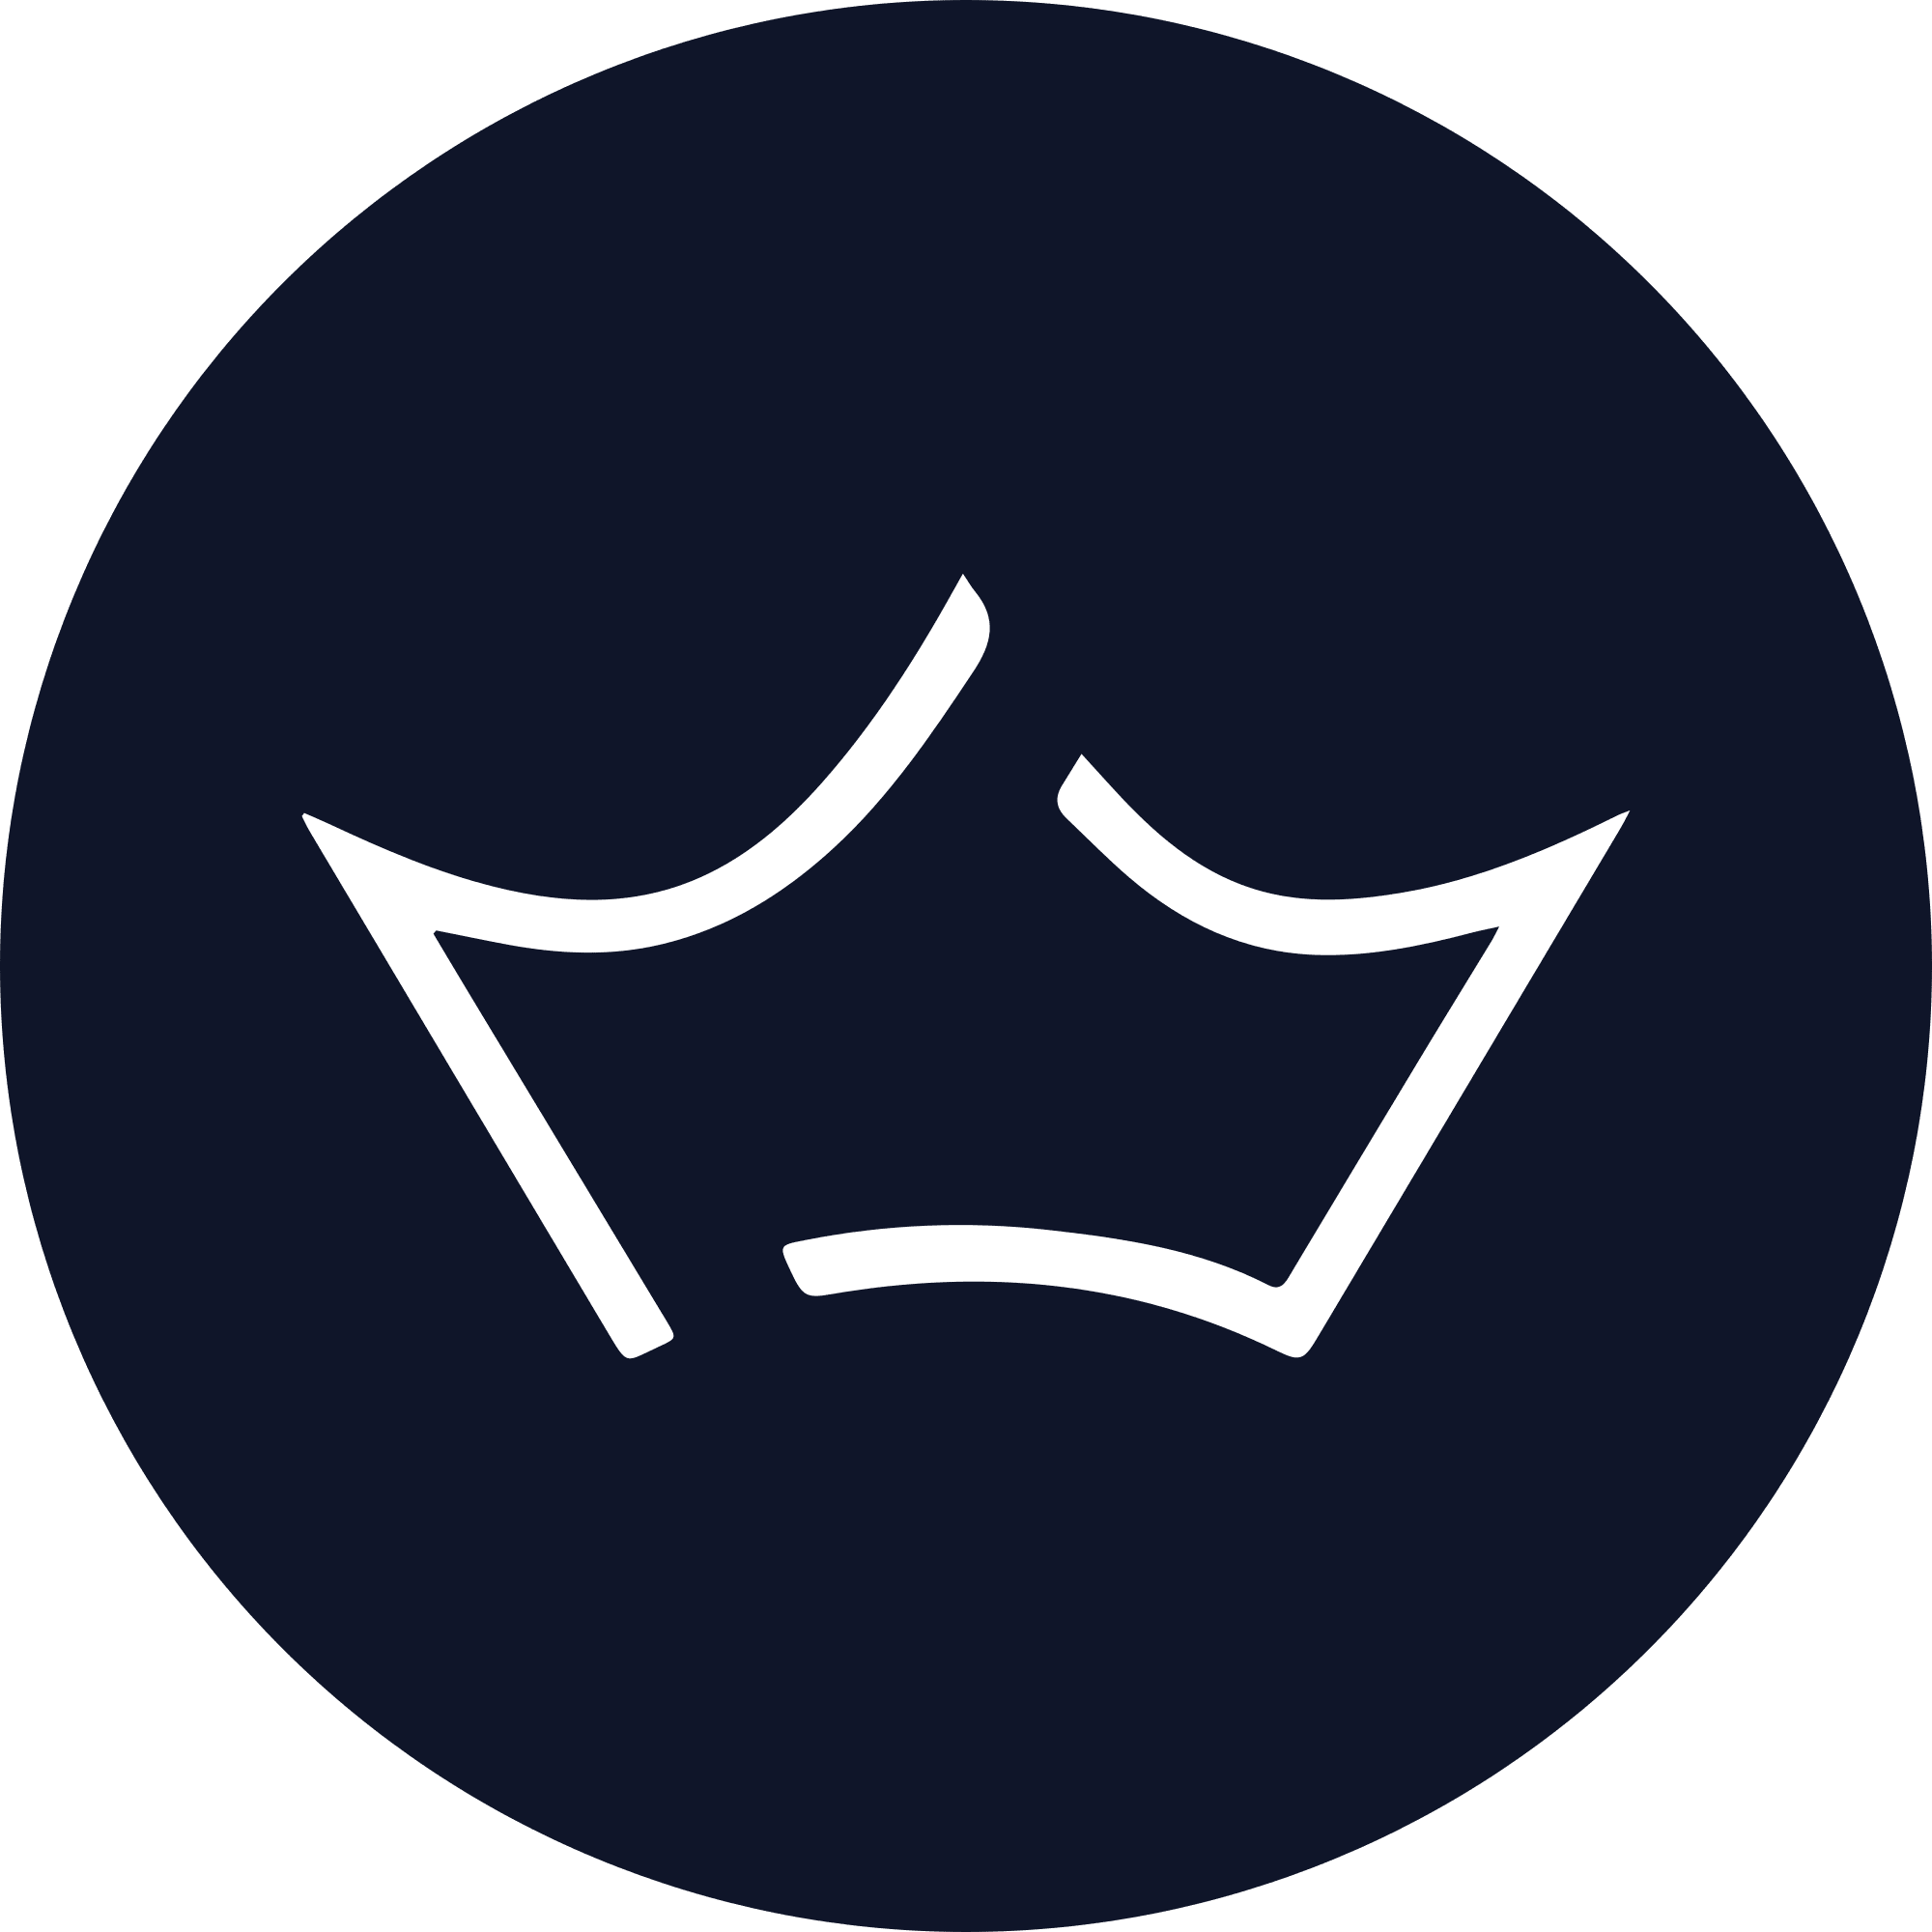 Crown logo in png format